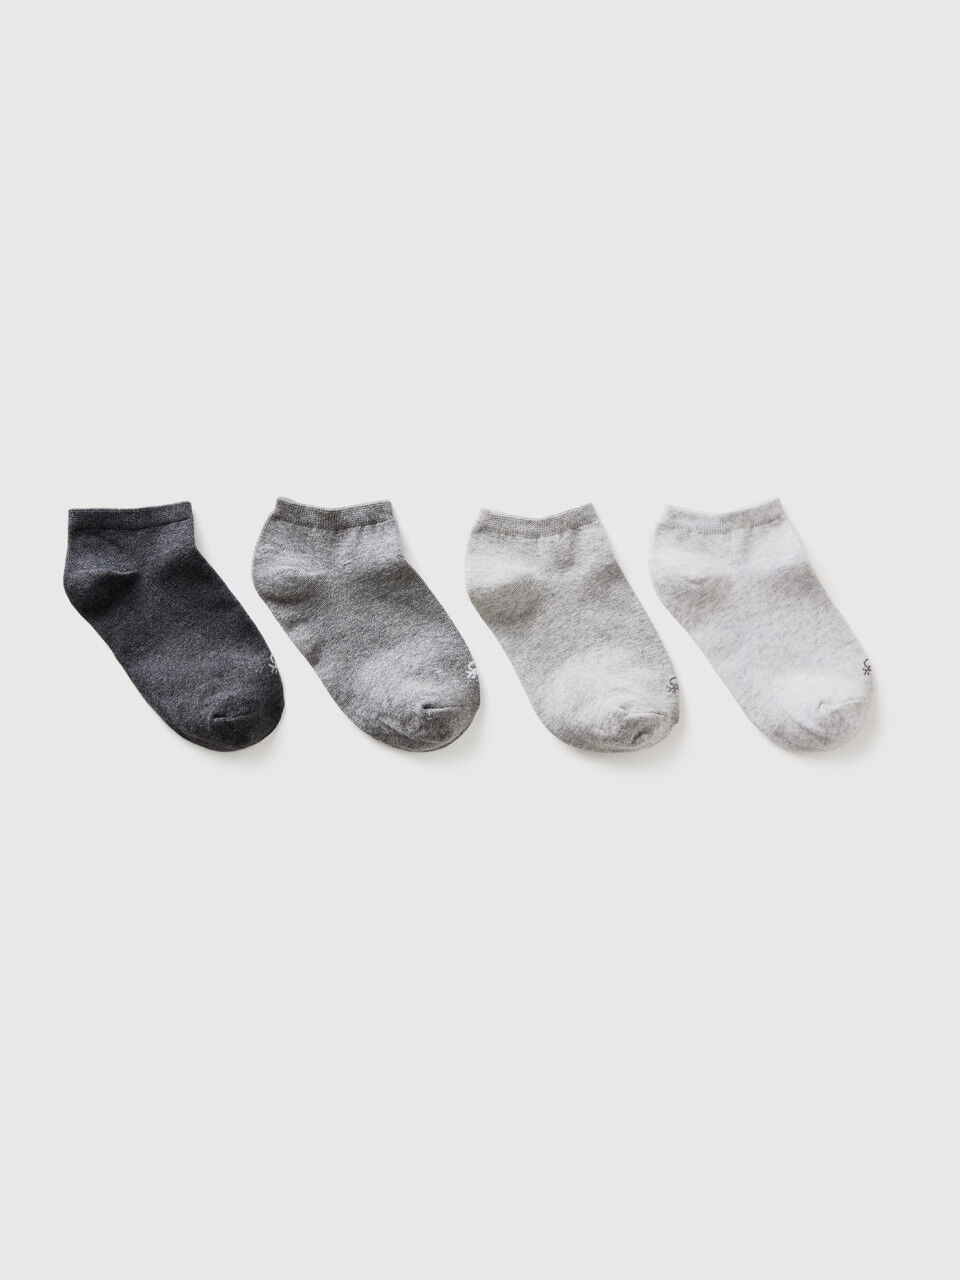 Four pairs of short socks